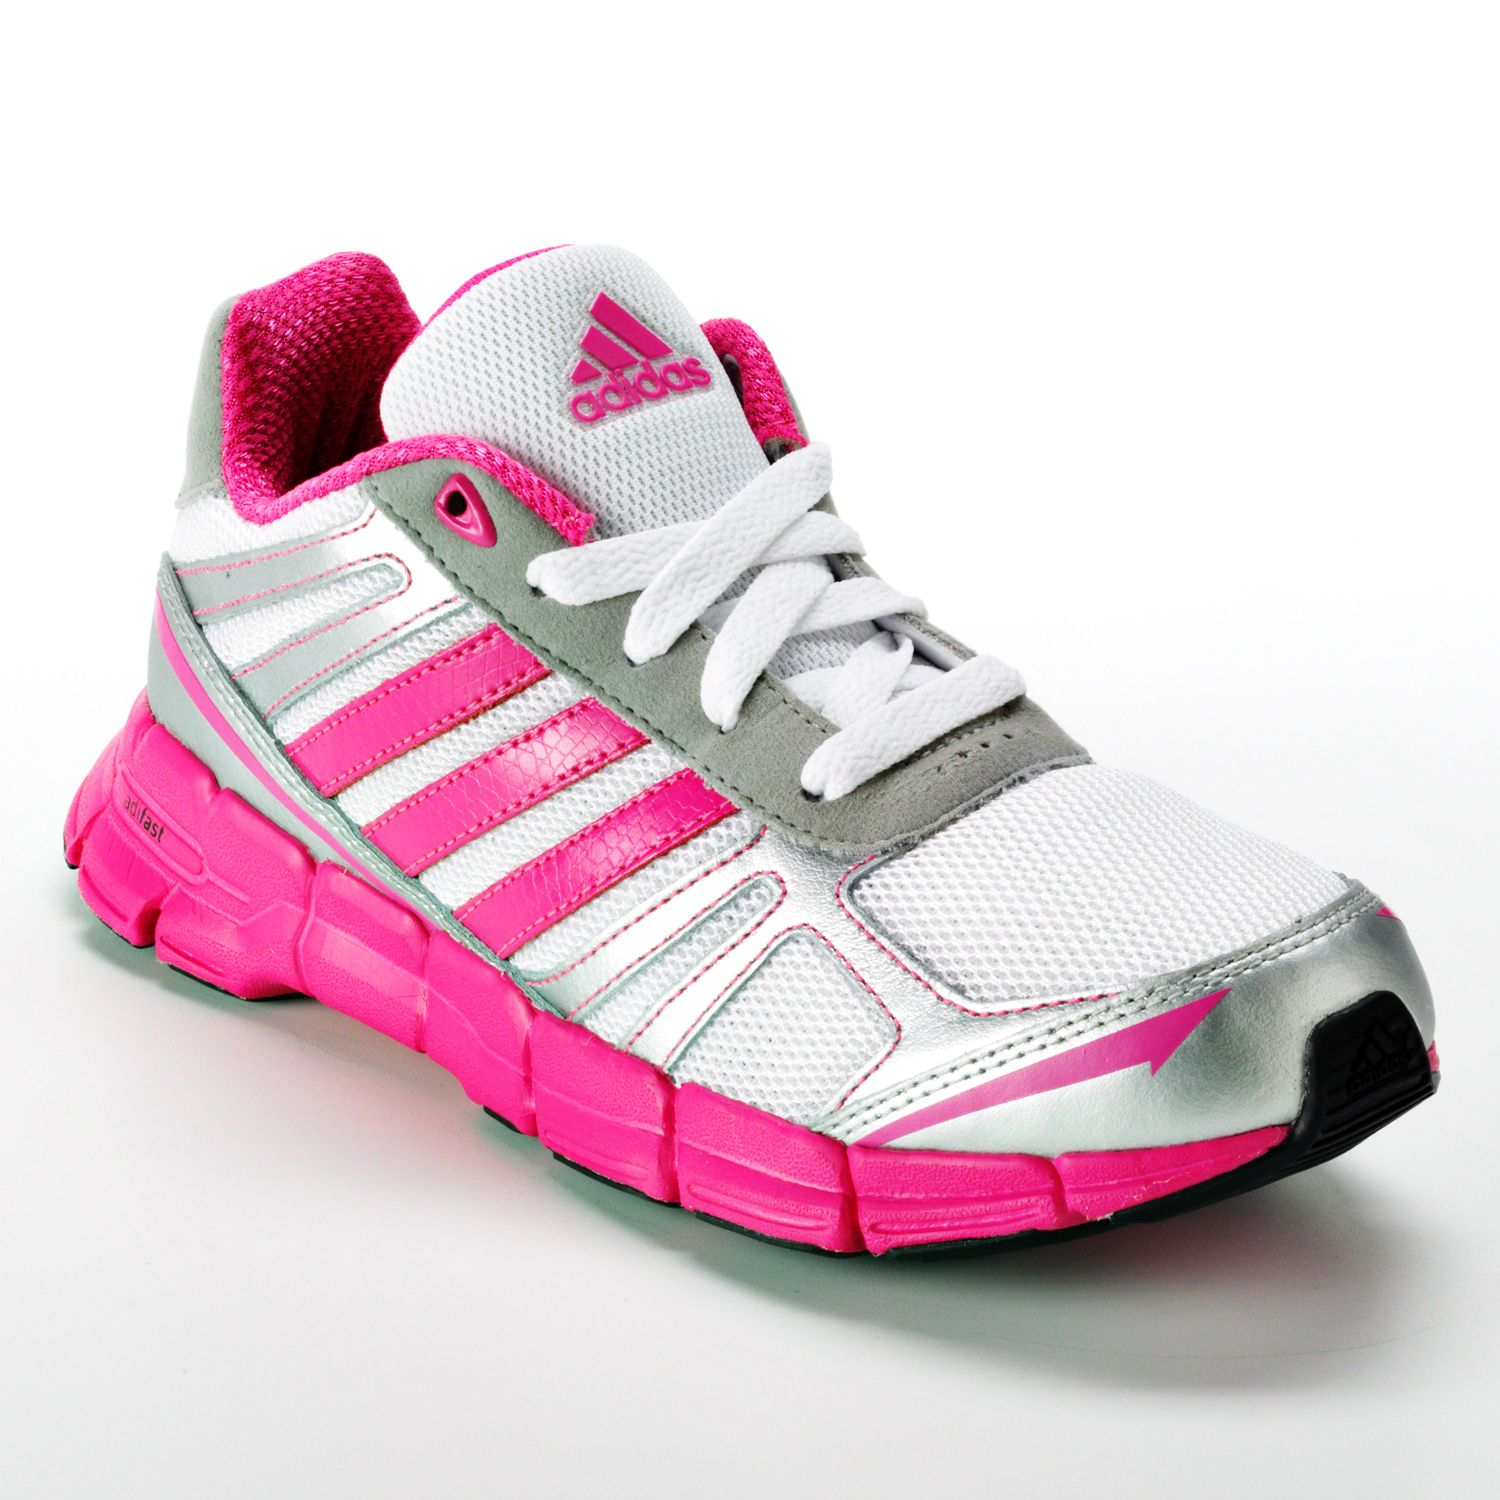 adidas tennis shoes at kohl's